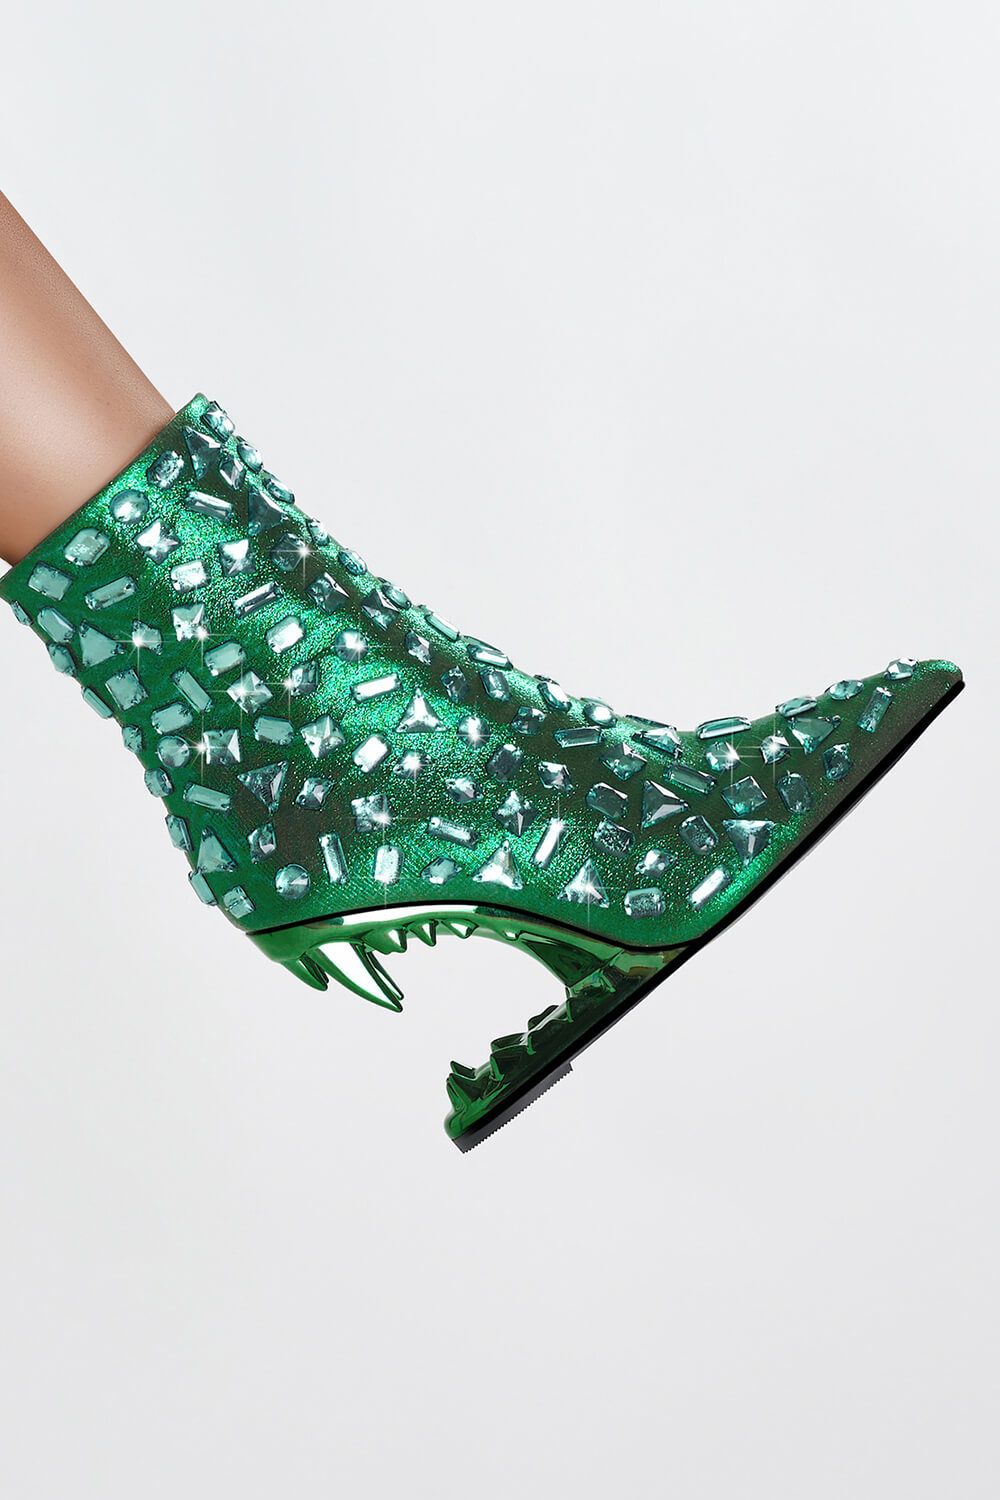 Rhinestone Embellished Pointed Toe Morso Heeled Ankle Boots - Green